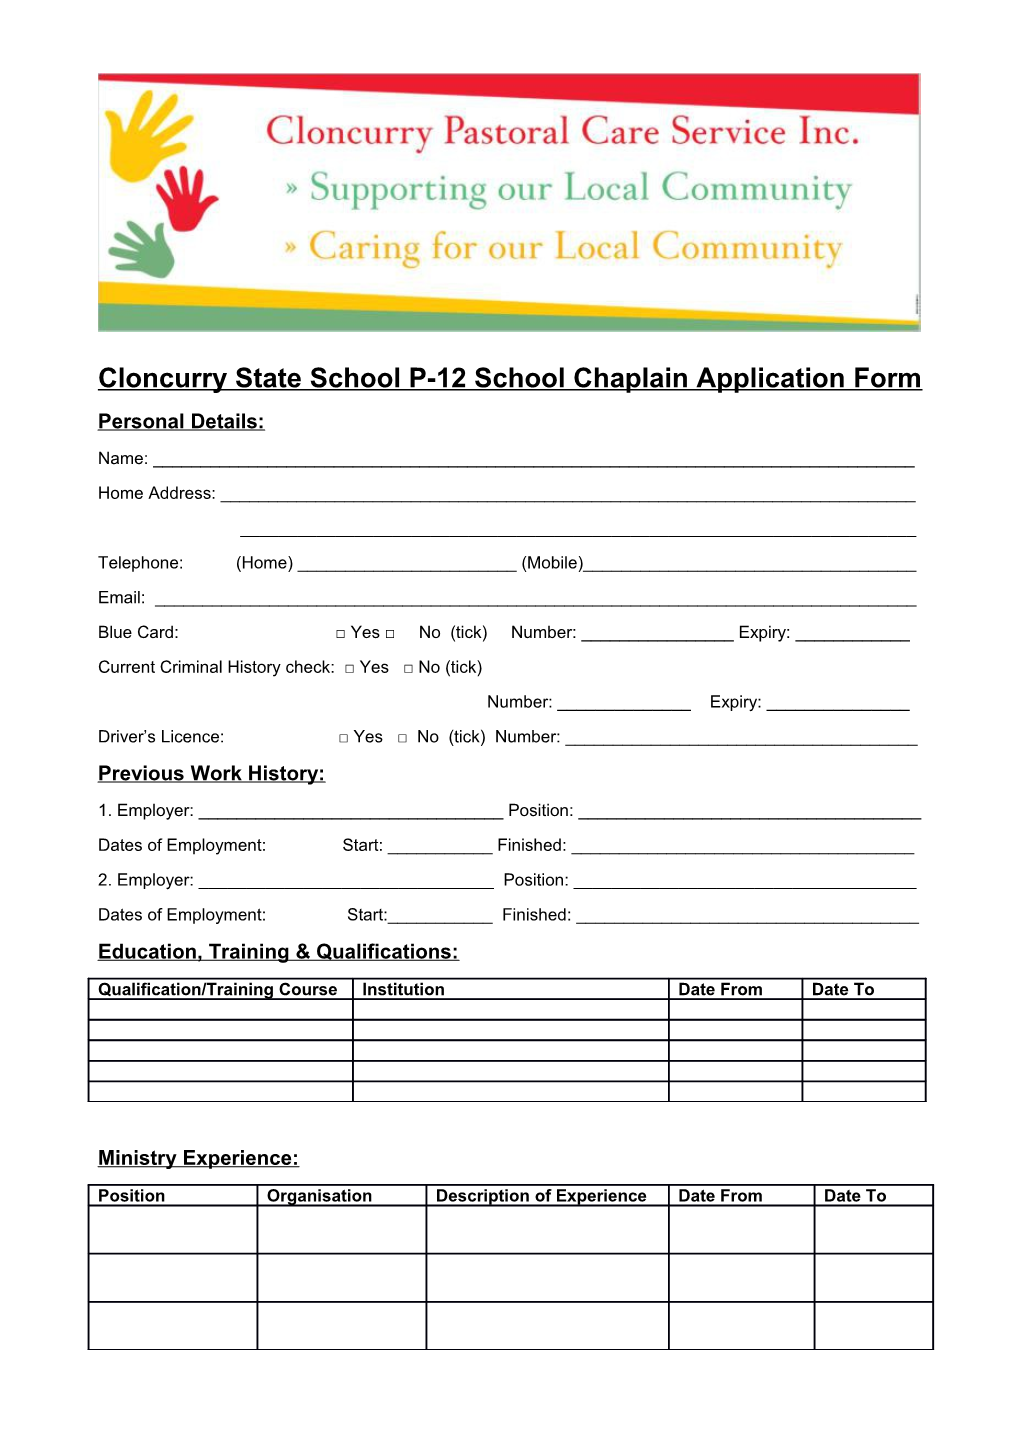 Cloncurry State School P-12 School Chaplain Application Form